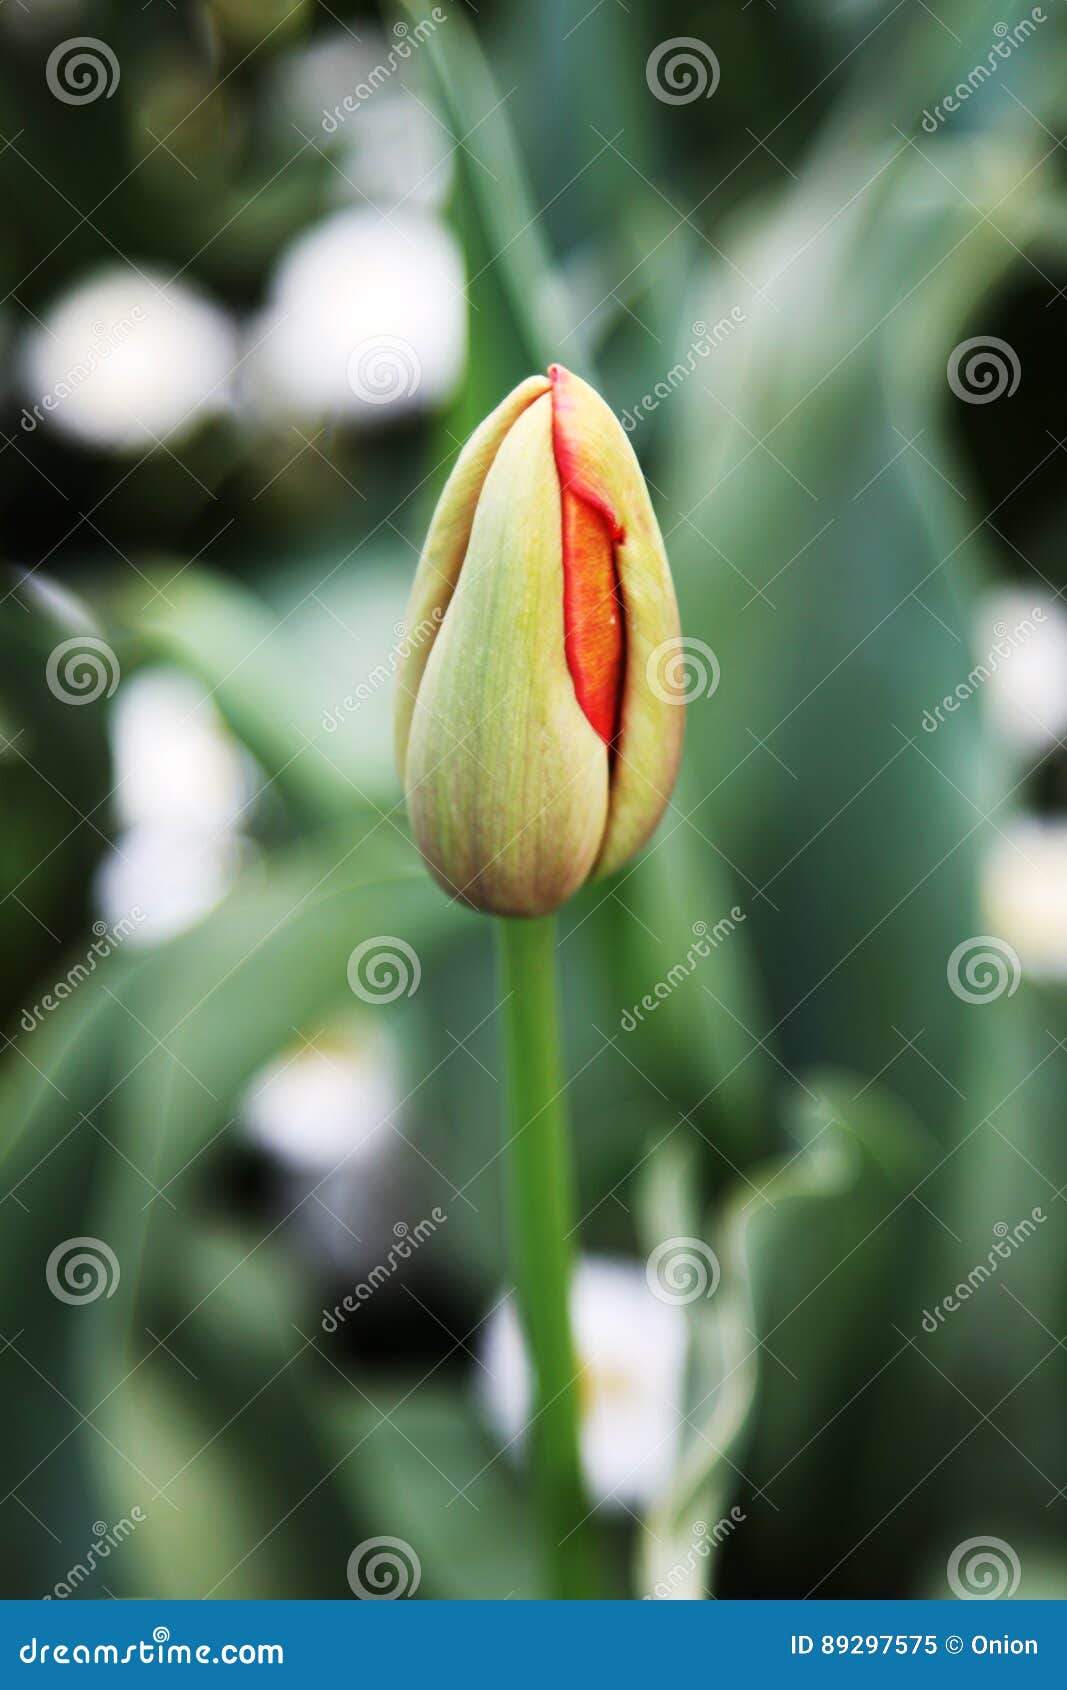 Single tulip stock image. Image of item, colorful, park - 89297575